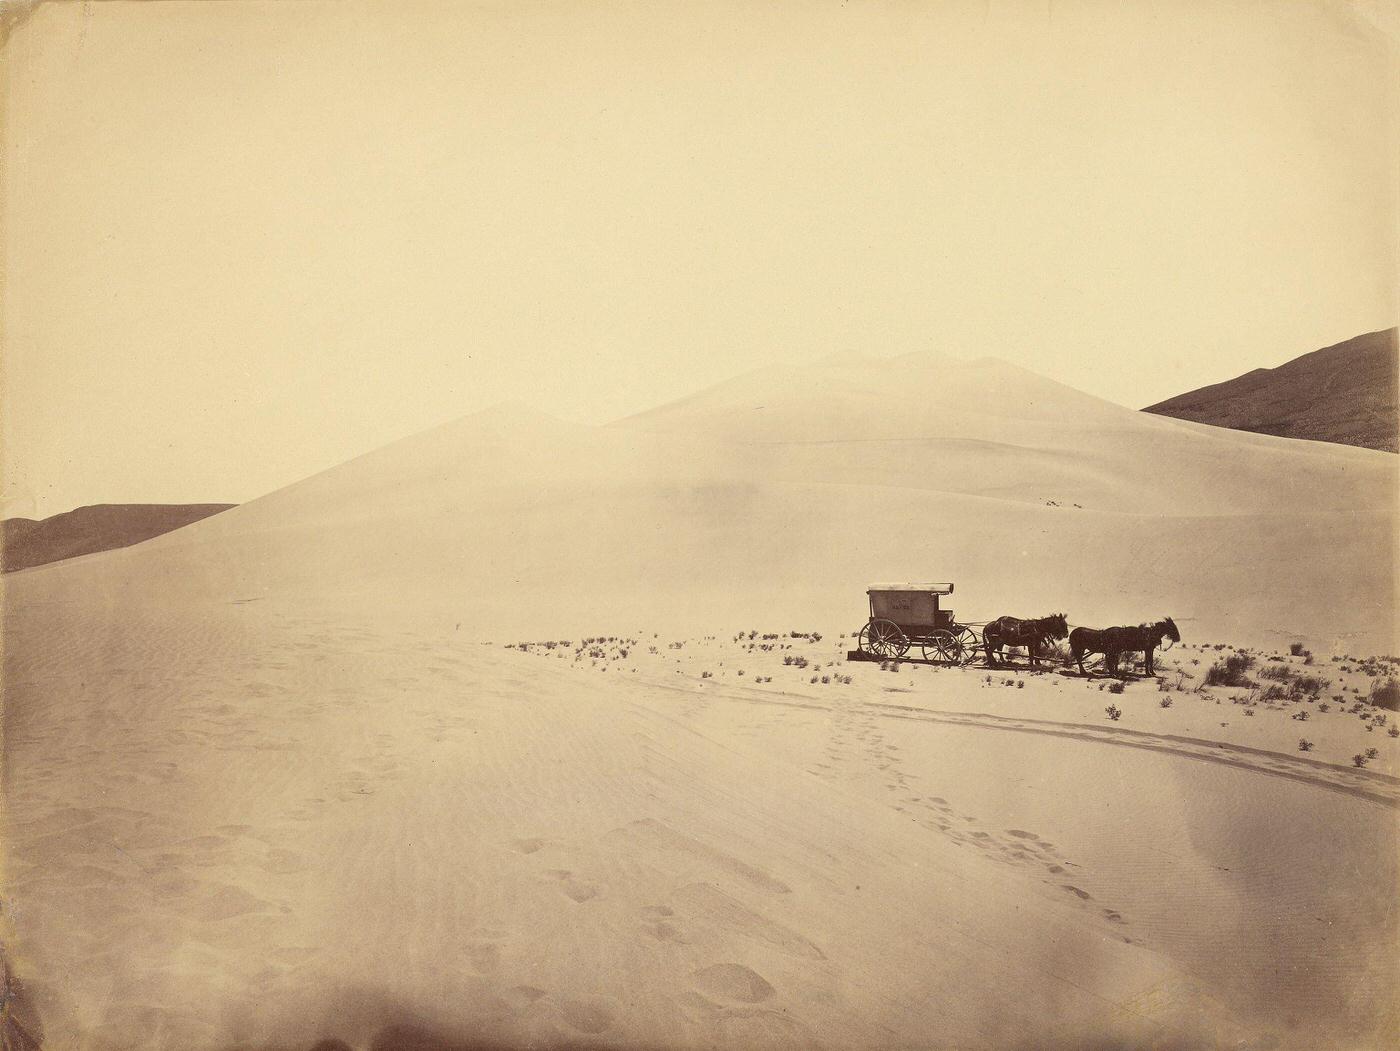 Carson, Nevada By O'Sullivan, desert sand hills near Sink of Carson, Nevada by Timothy H O'Sullivan 1867.